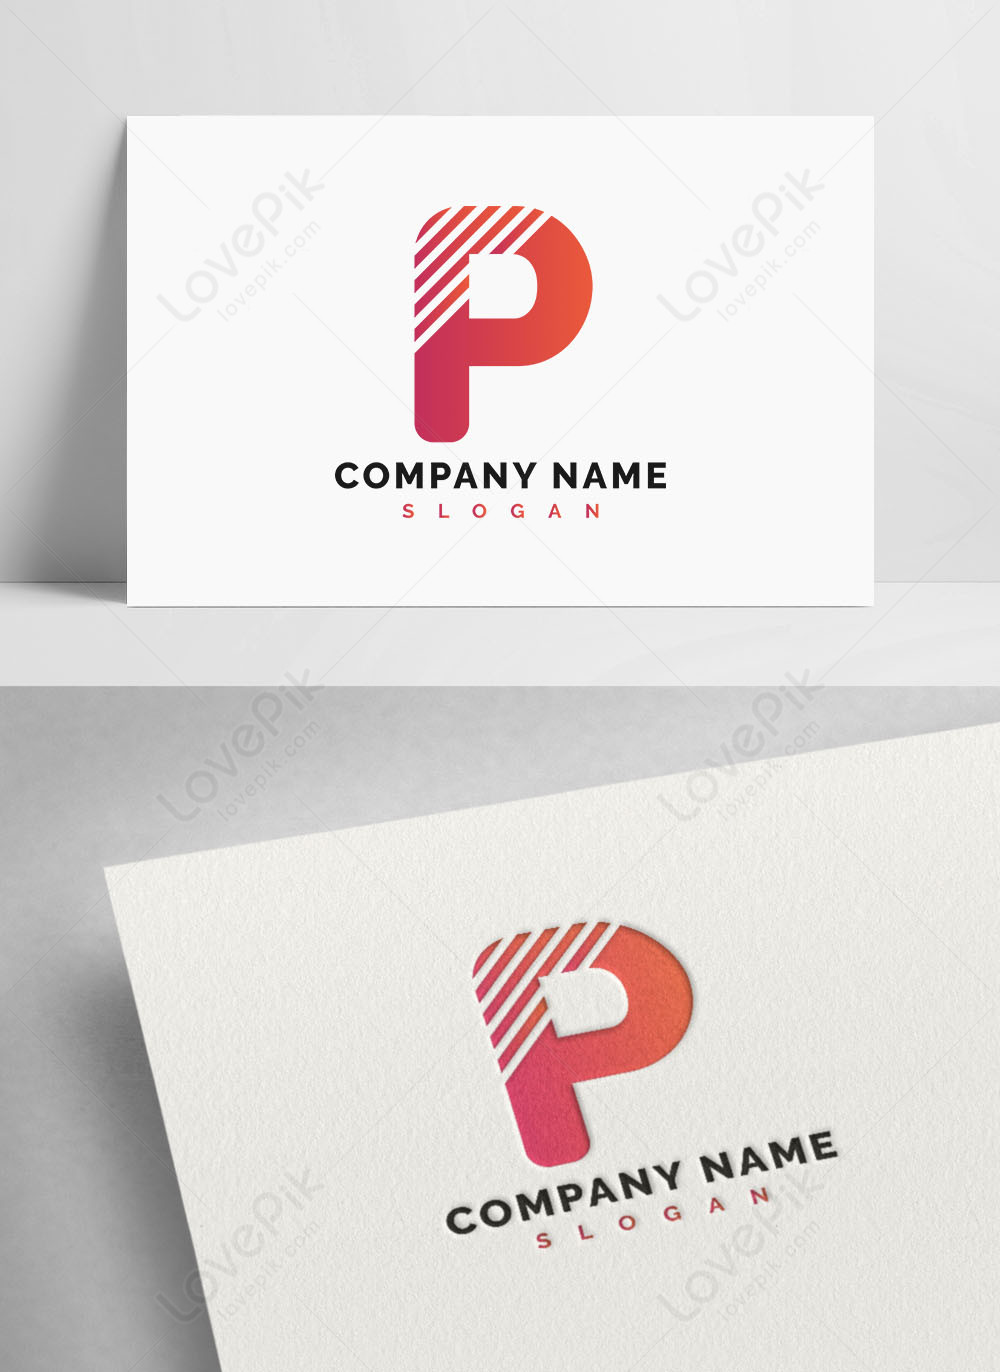 Creative letter p logo design with pen shape Vector Image